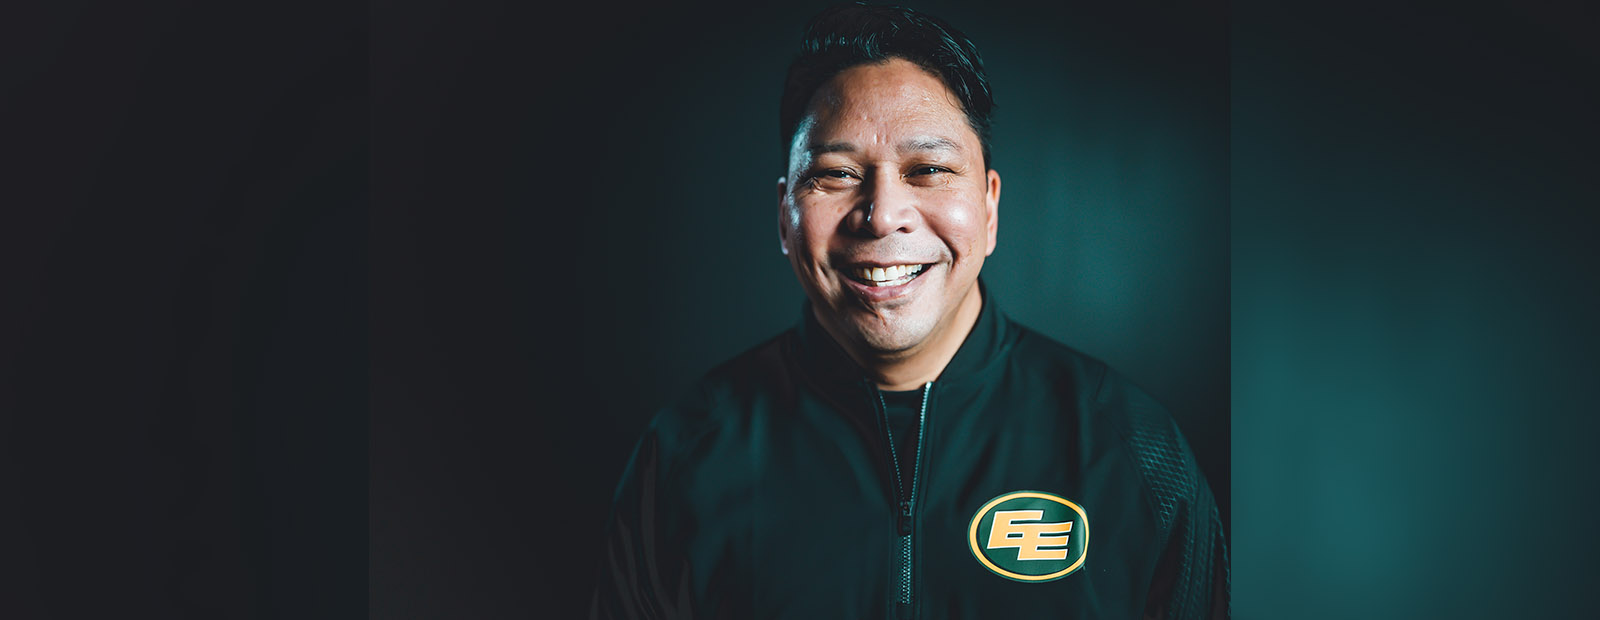 Victor Cui smiling and wearing an Edmonton Elks jacket